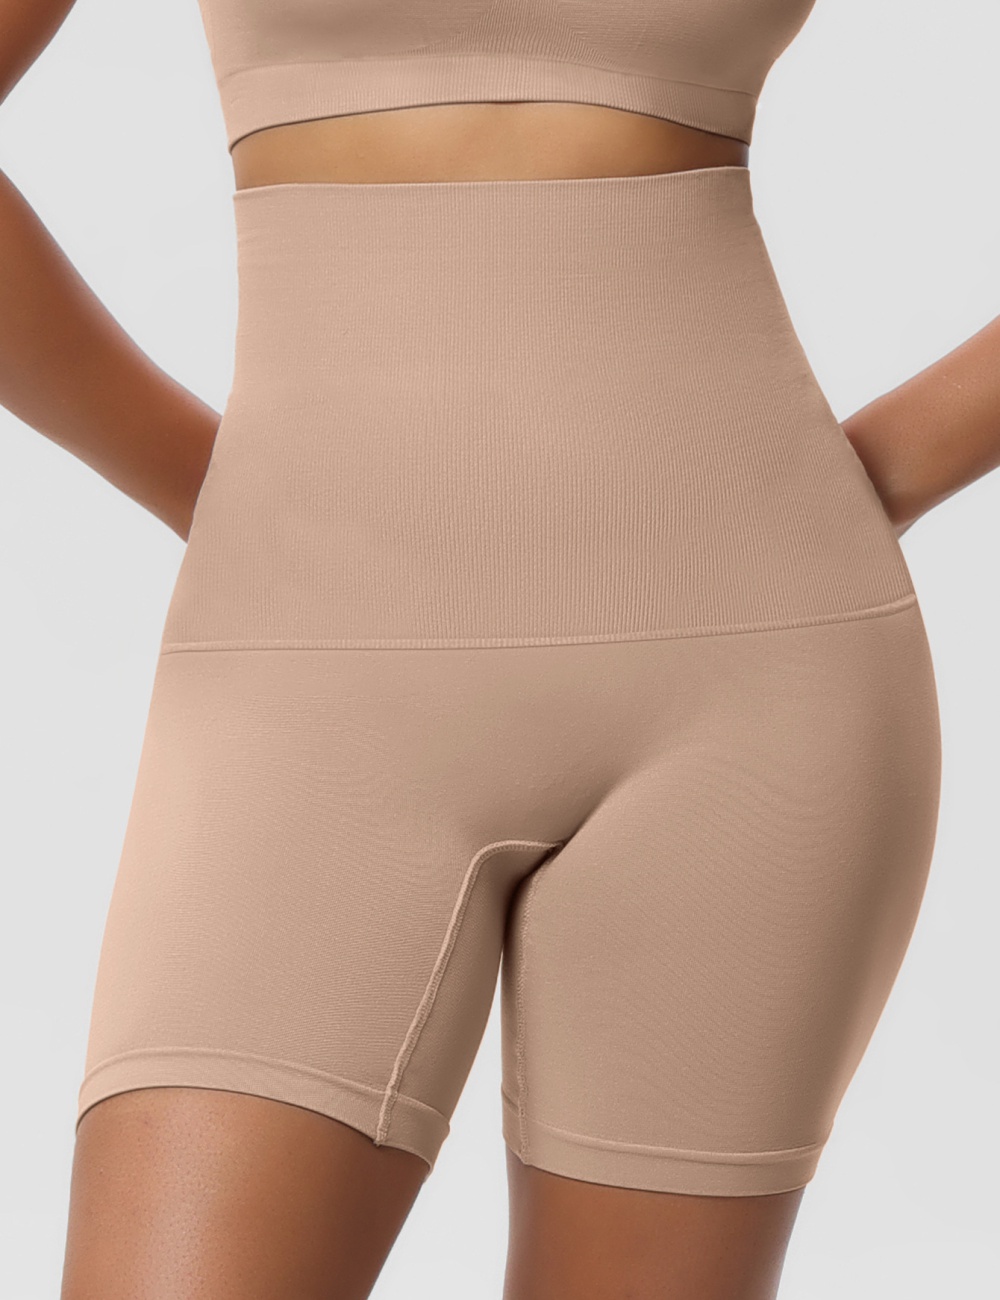 High waist safety pants pants hip raise hold abdomen corset